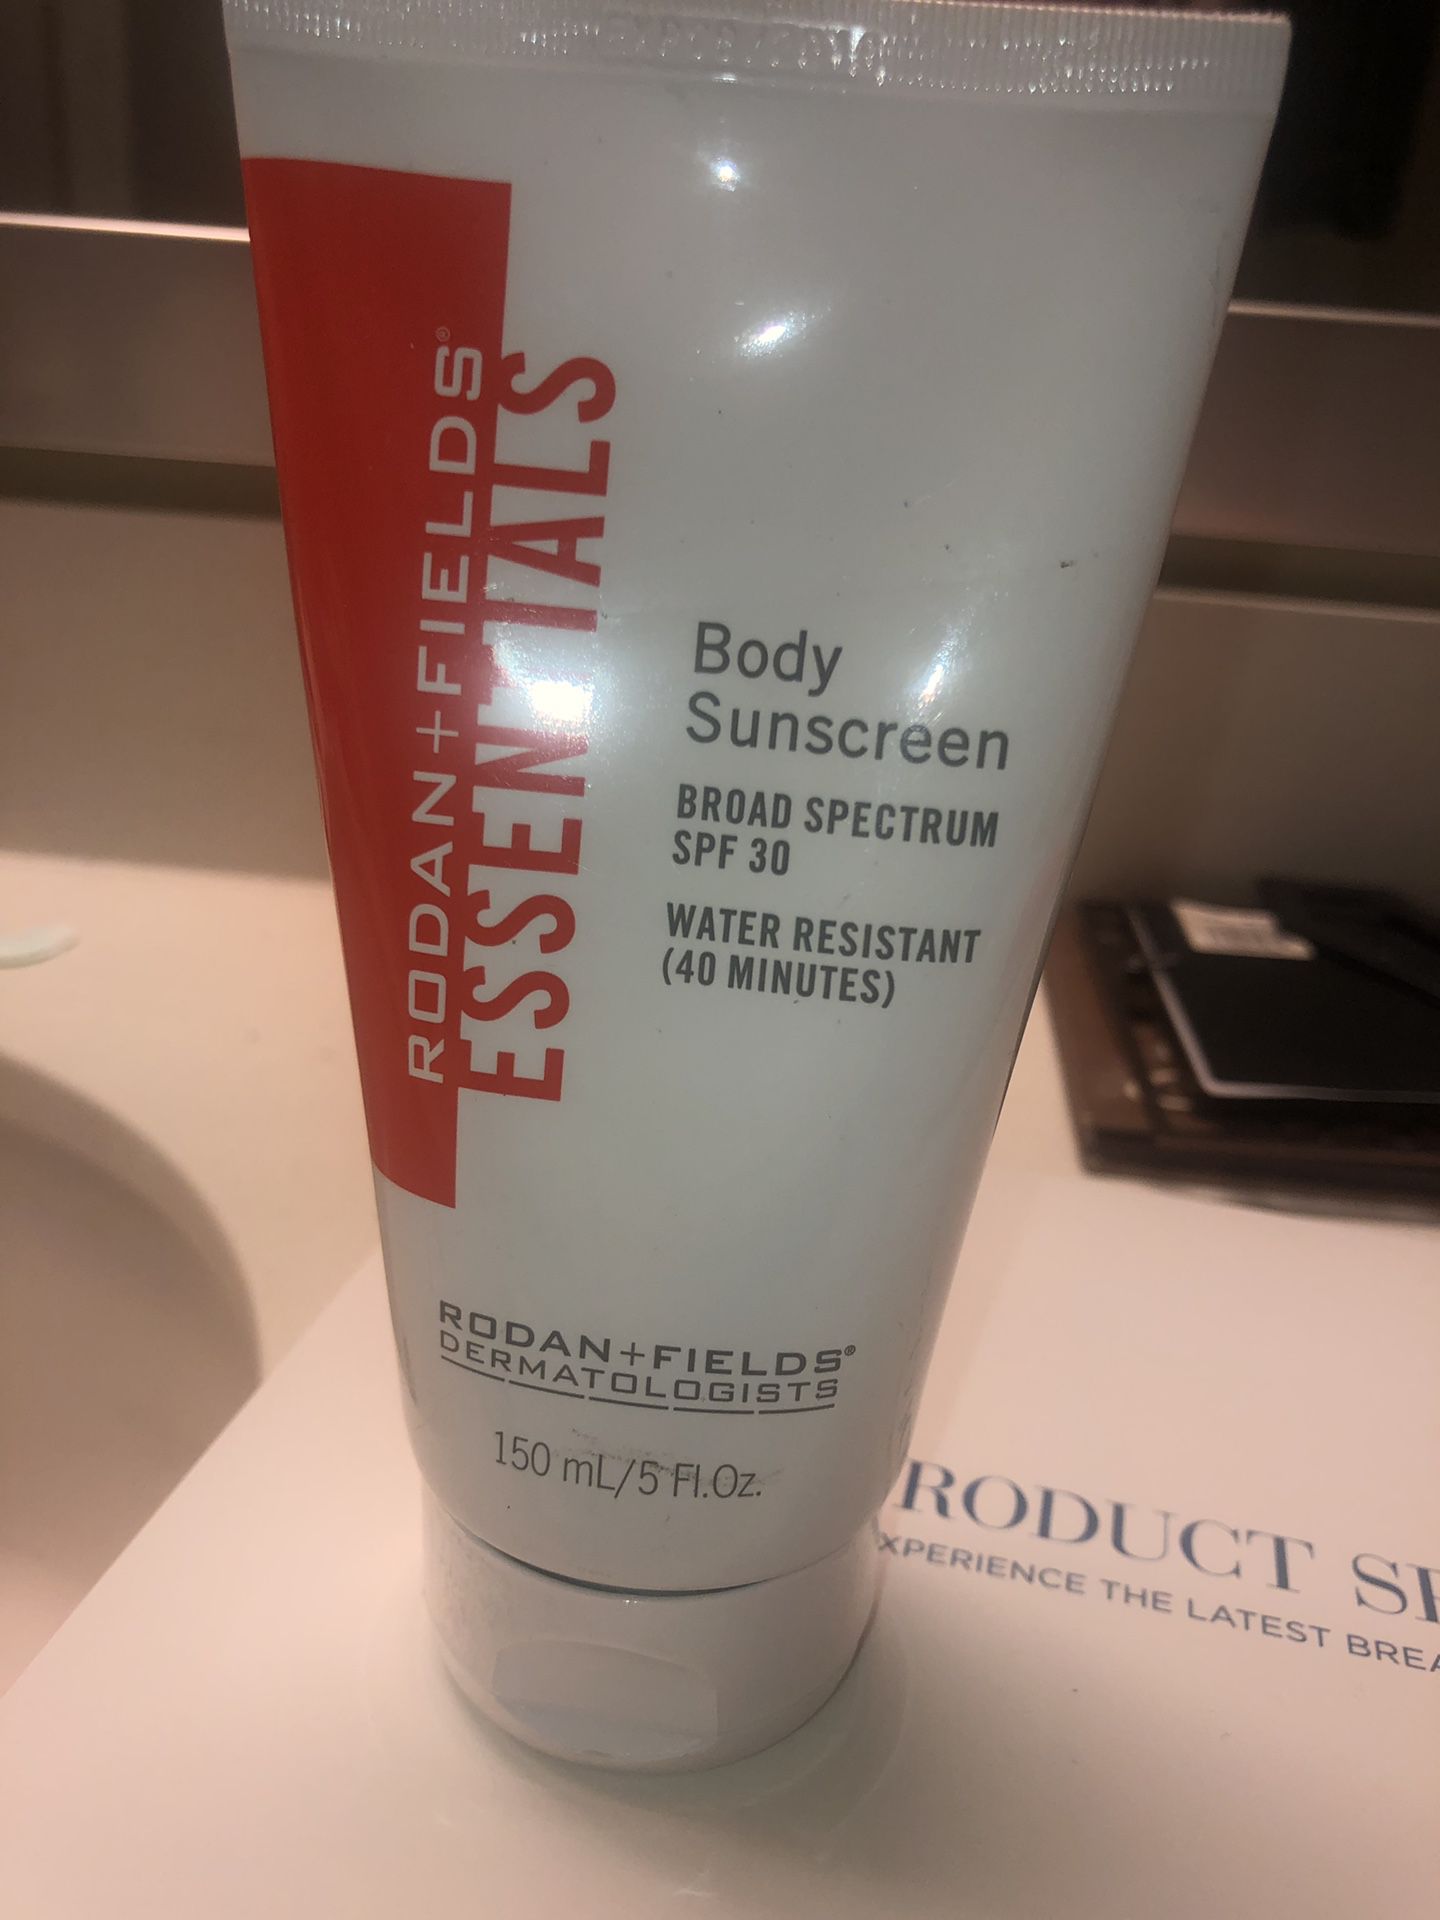 Rodan and fields body sunscreen